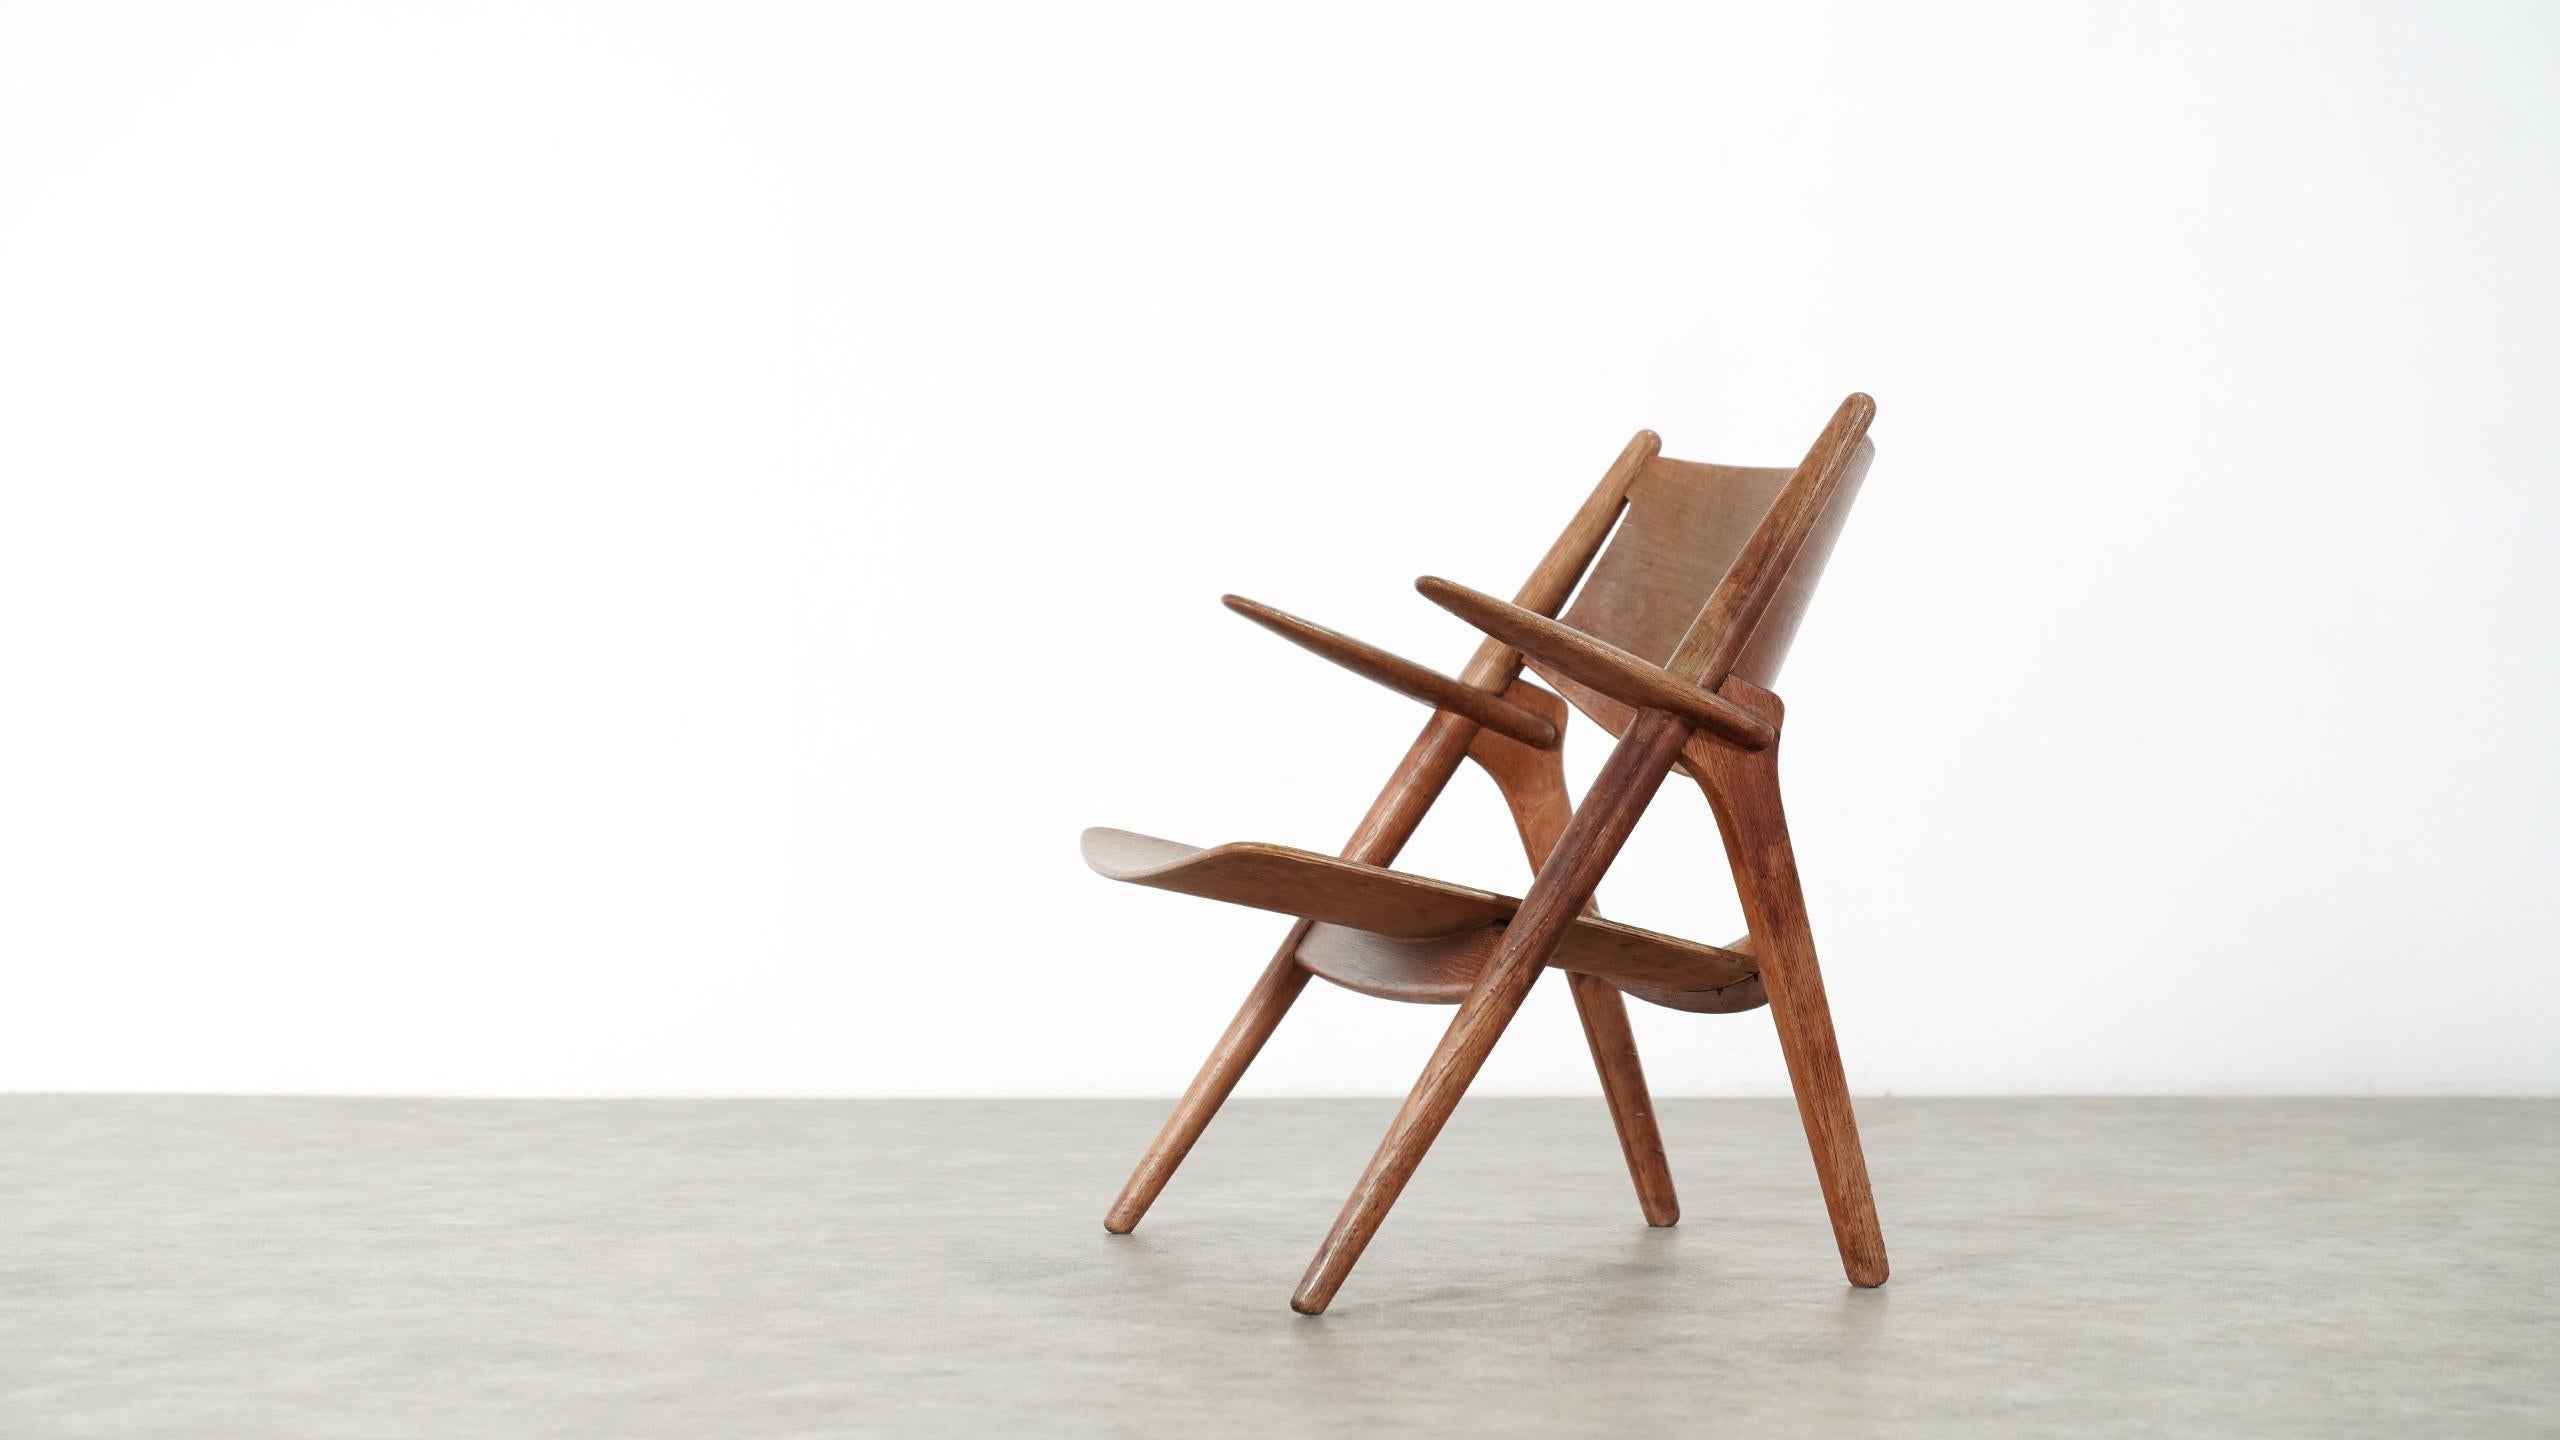 Hand-Crafted Hans J. Wegner, Sawbuck Chair in Oak 1951 for Carl Hansen, Denmark